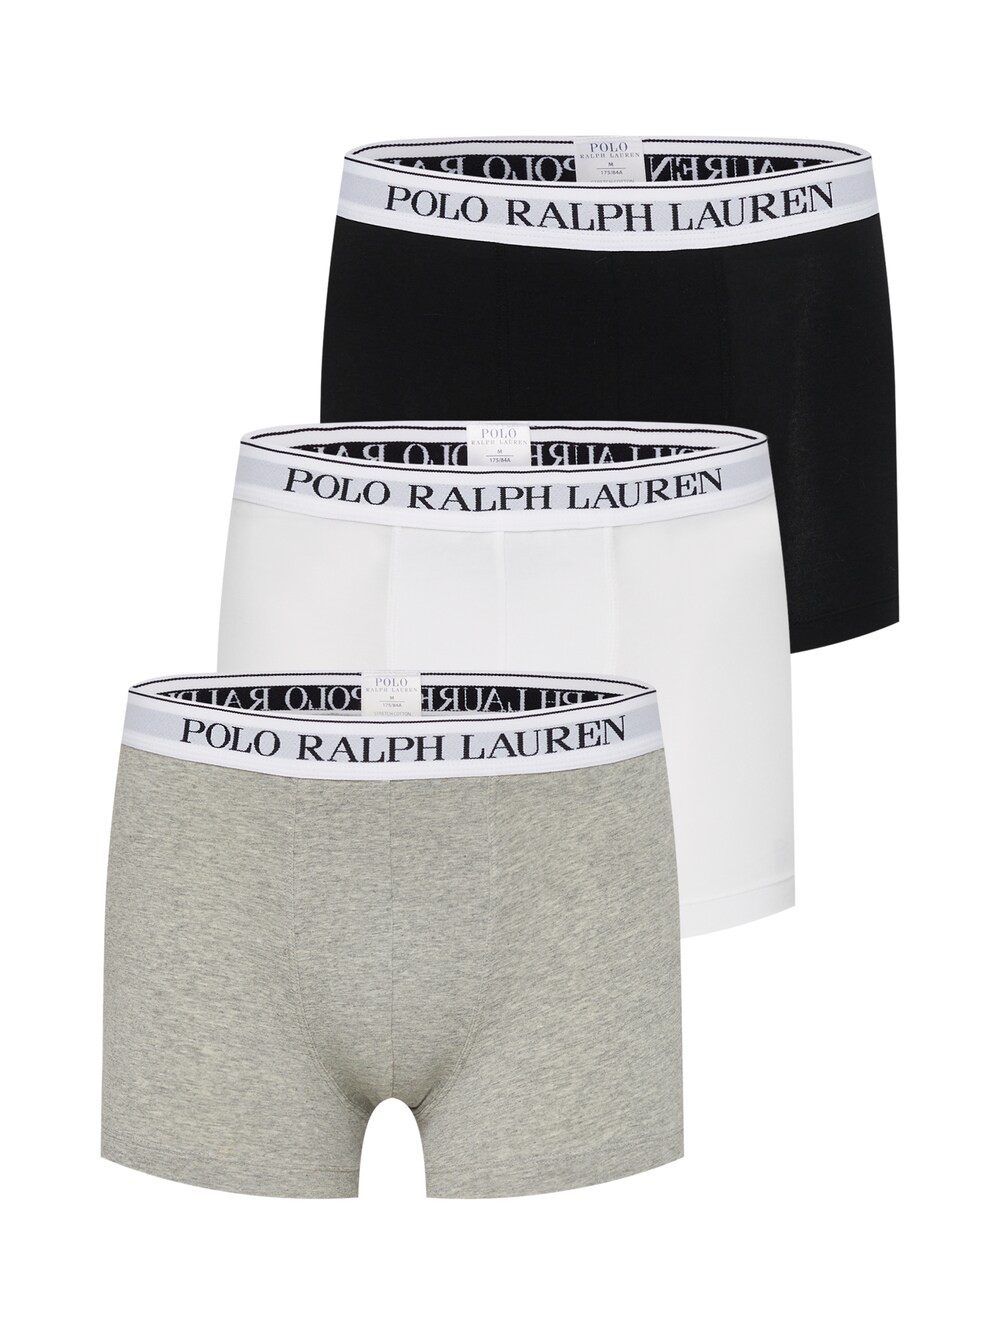 Трусы боксеры Polo Ralph Lauren Classic, светло-серый/пестрый серый/черный/натуральный белый